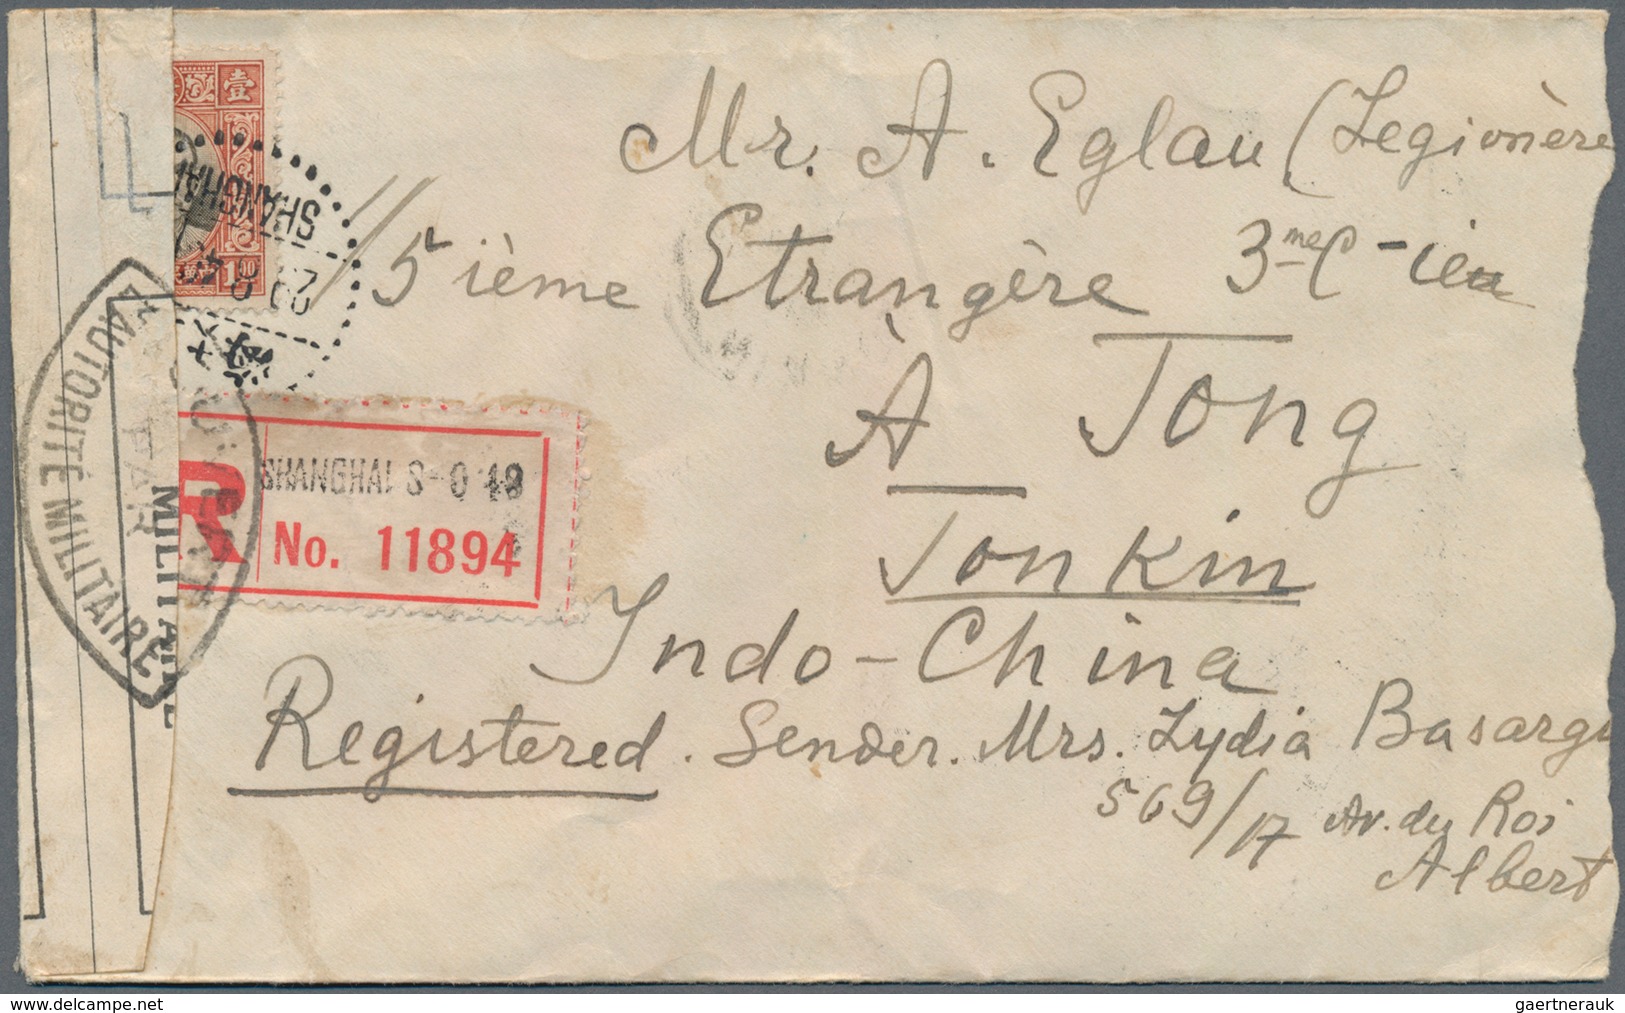 Japanische Besetzung  WK II - China - Zentralchina / Central China: 1940, Registered And Censored Co - 1943-45 Shanghai & Nanjing